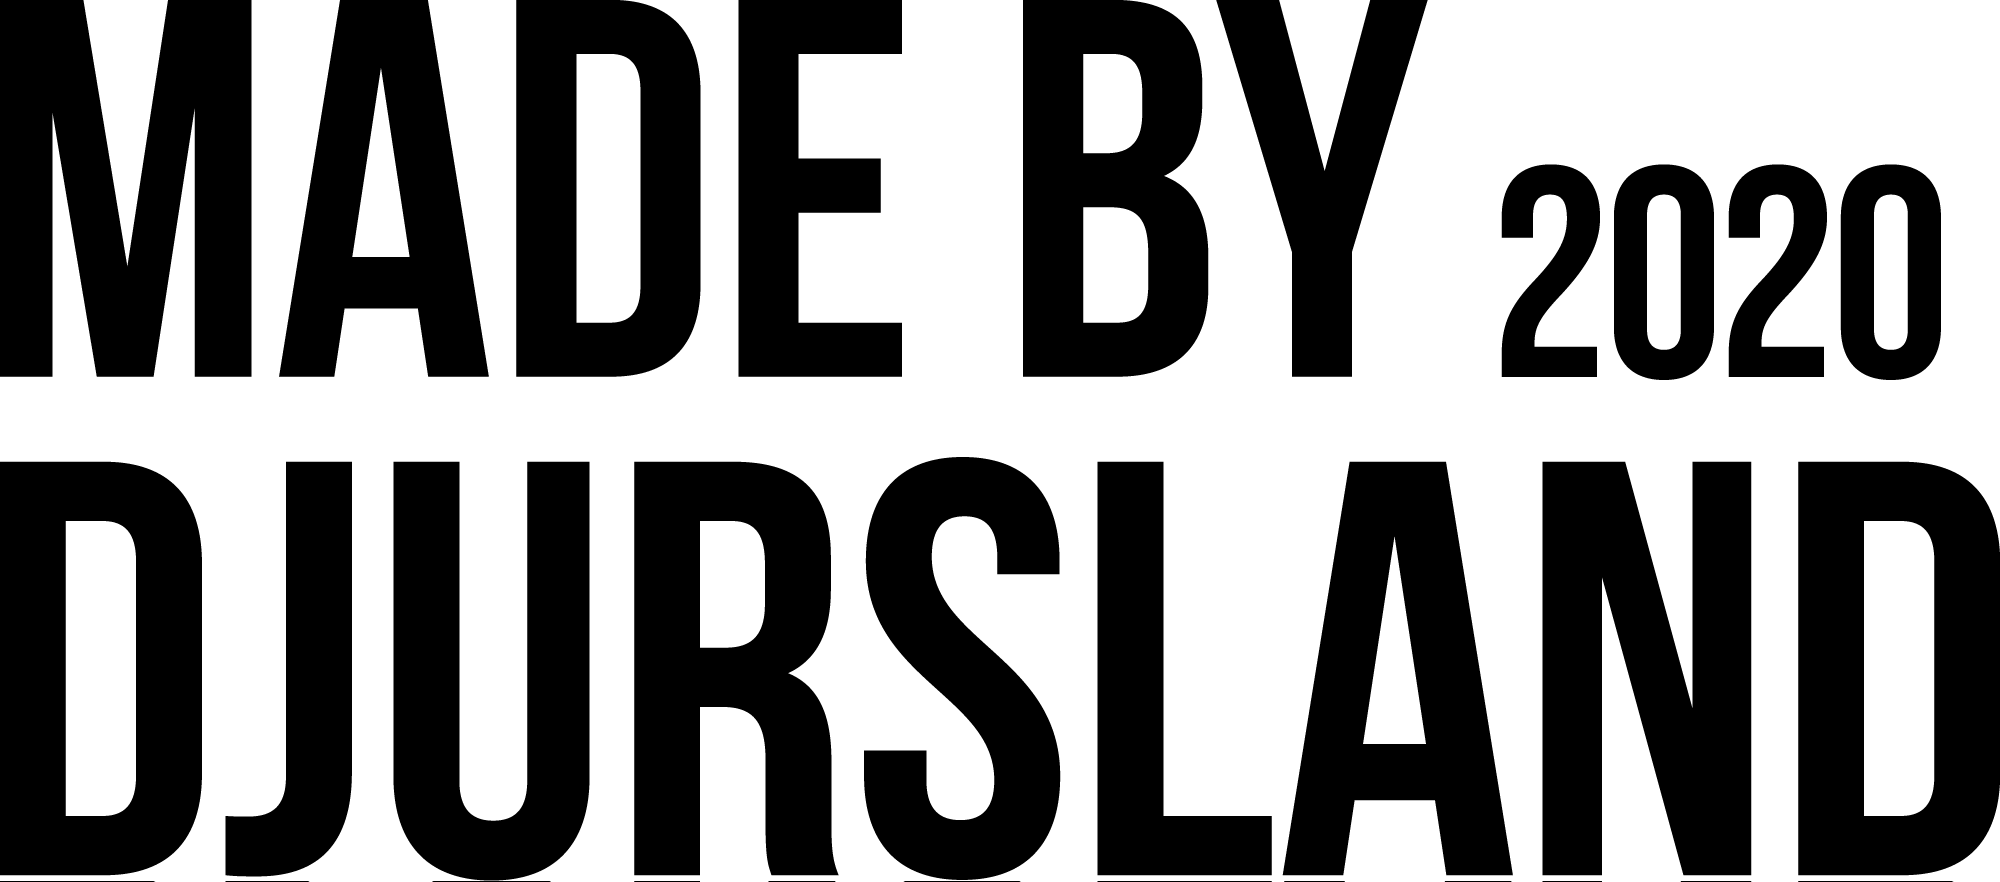 Made by djursland-logo